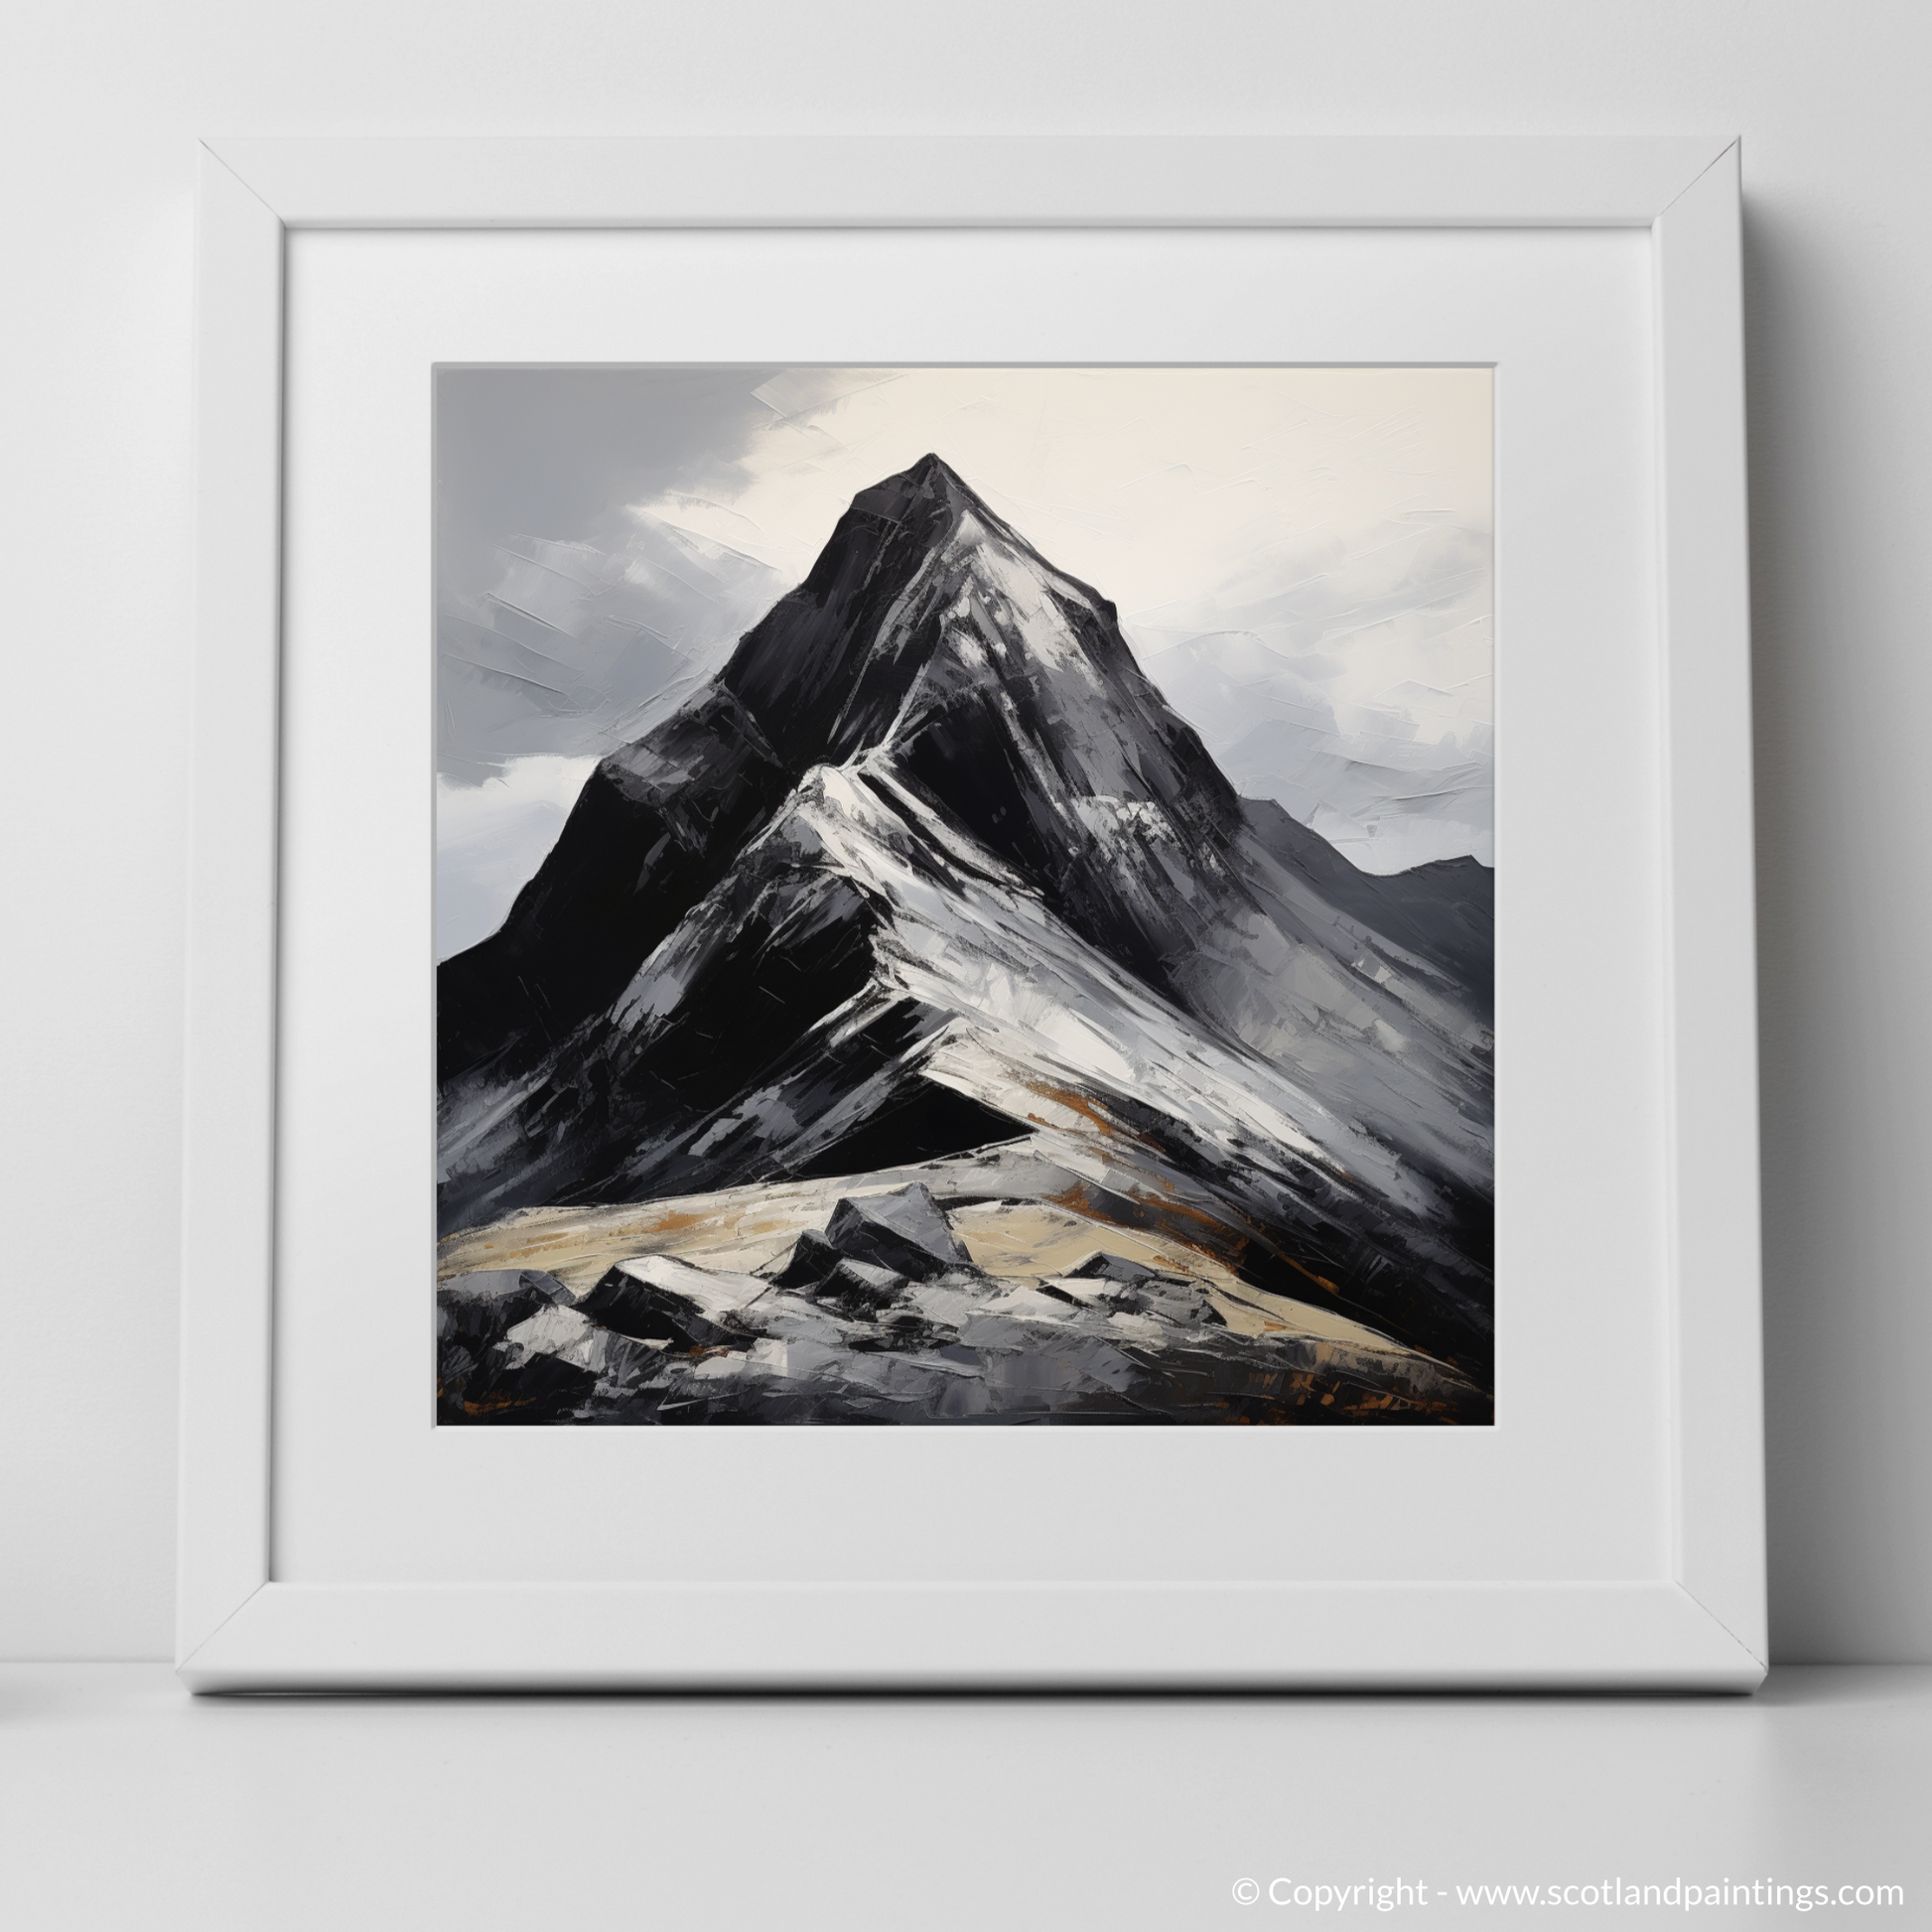 Art Print of Sgurr Dearg, Highlands with a white frame